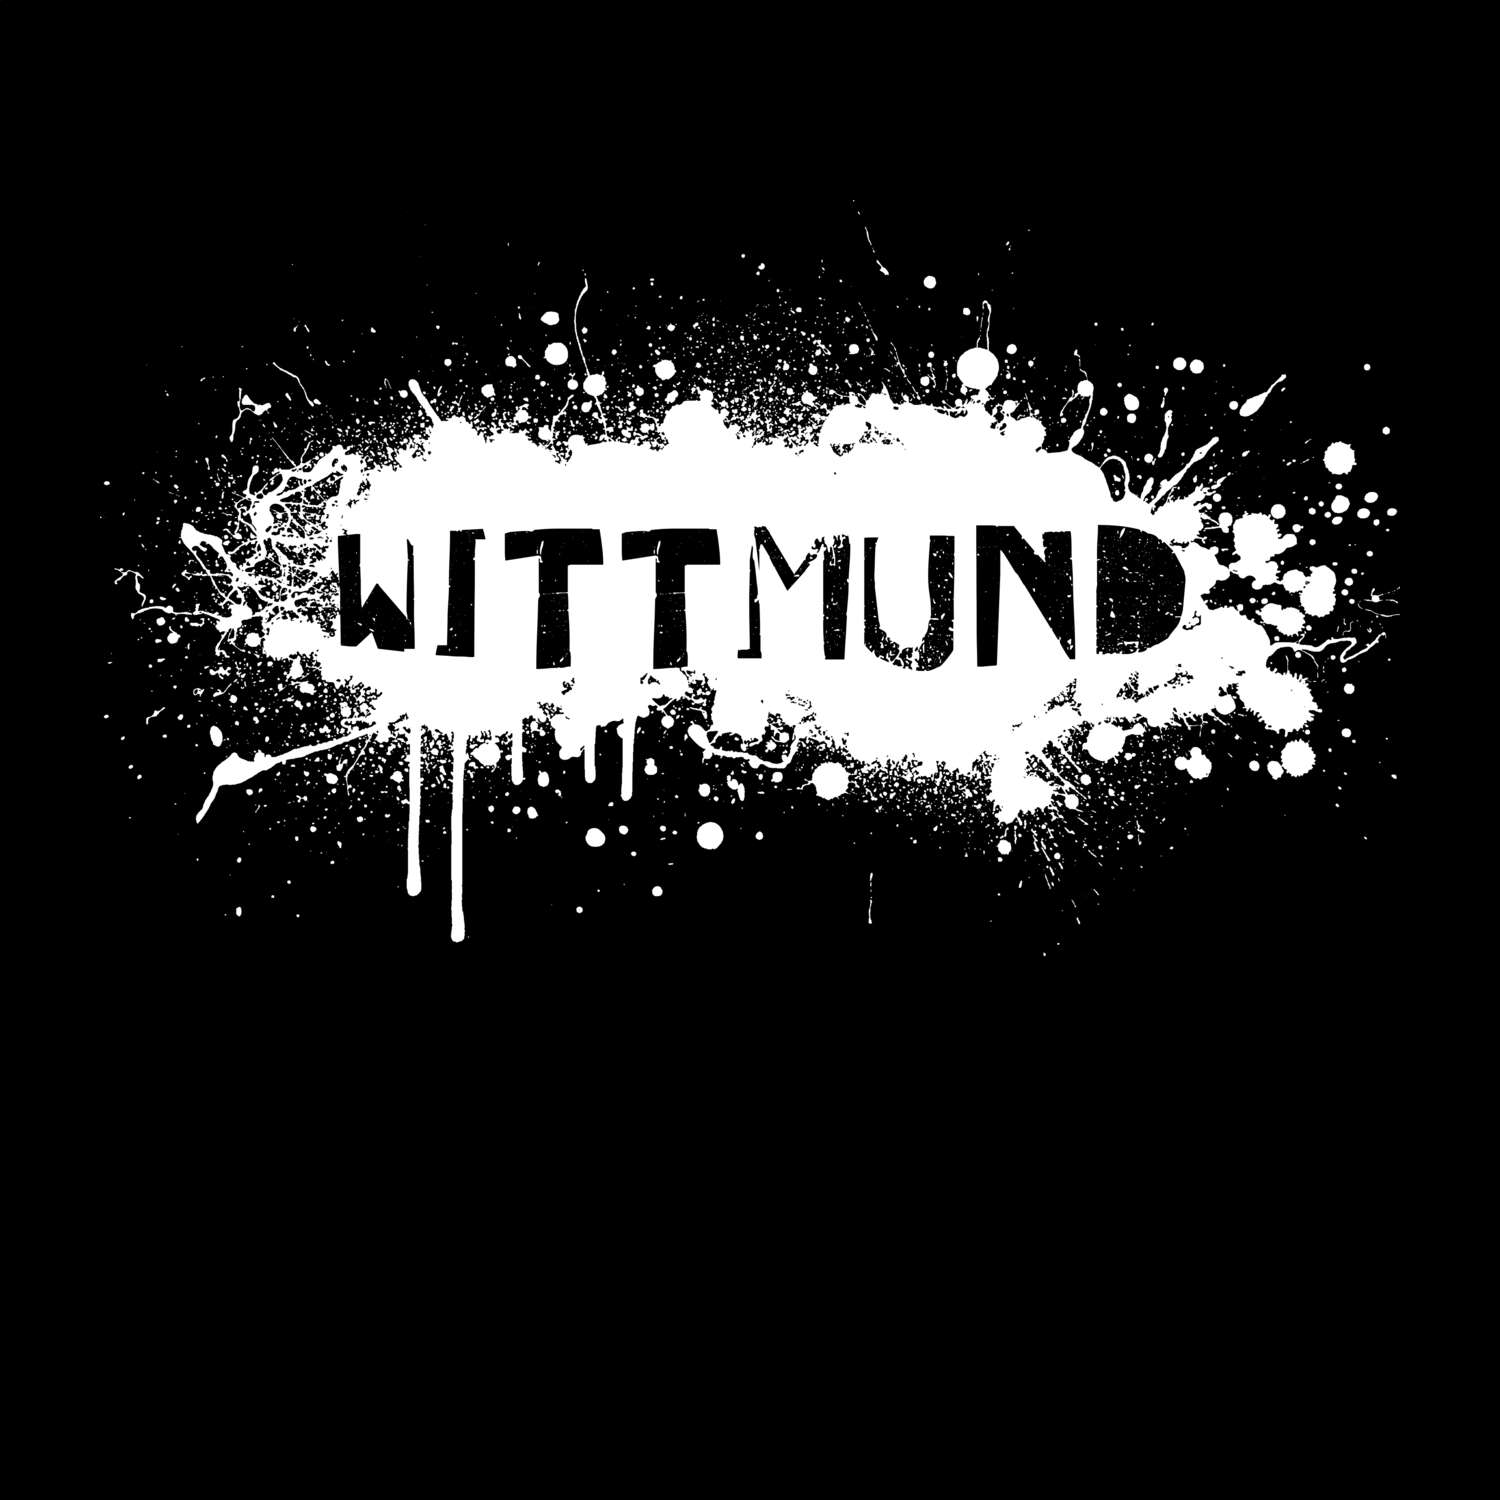 Wittmund T-Shirt »Paint Splash Punk«